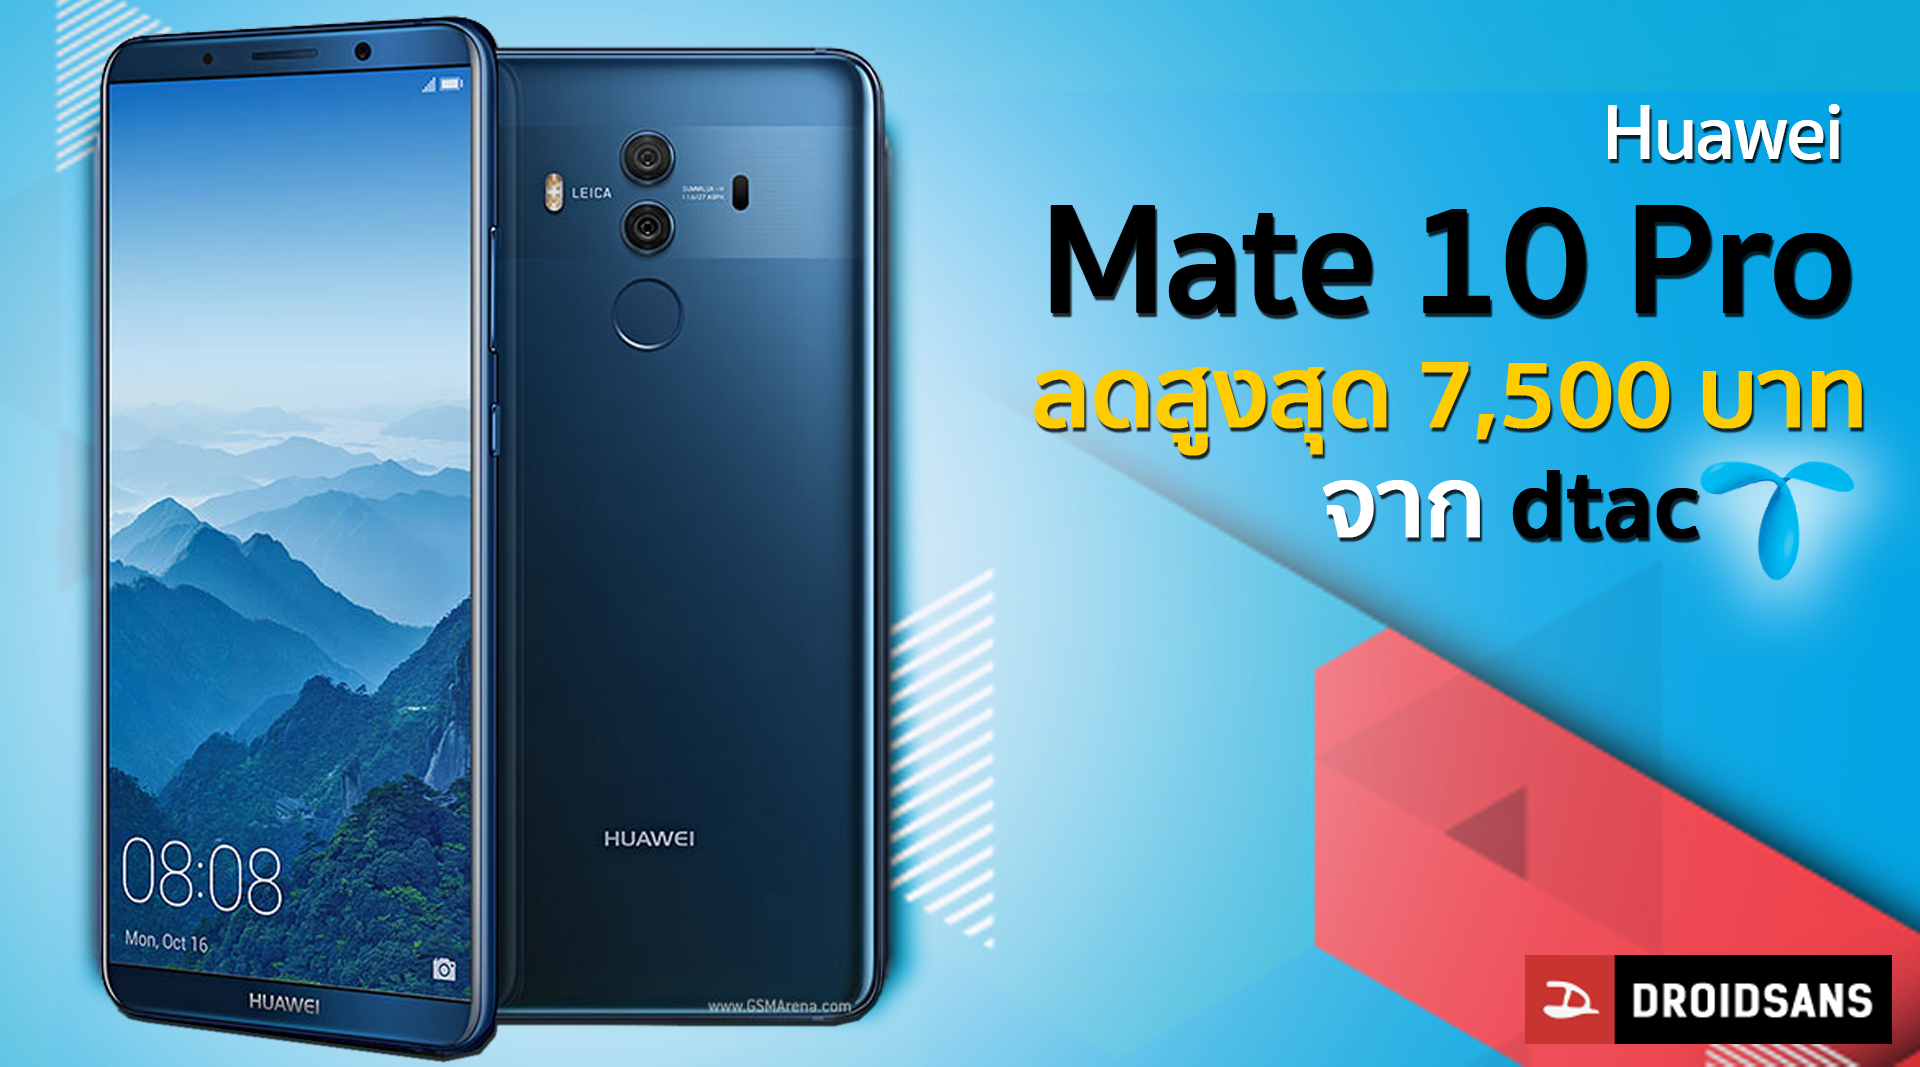 dtac จัดโปรฯ ลดราคา Huawei Mate 10 Pro สูงสุด 7,500 บาท